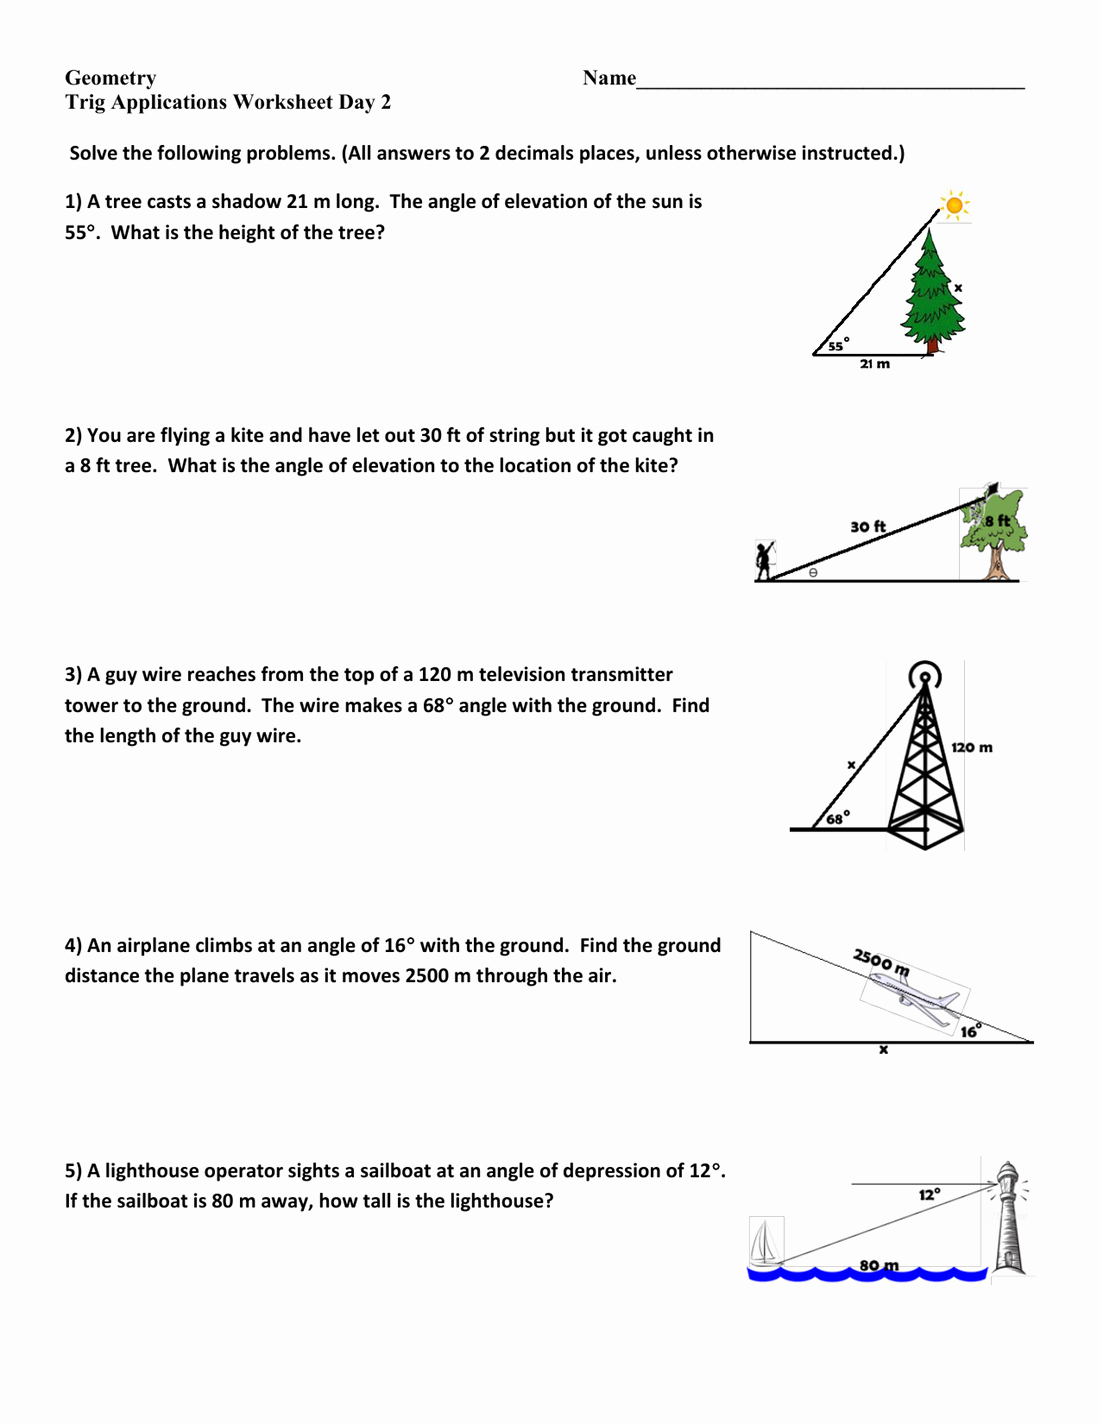 Right Triangle Trigonometry Worksheet Answers New Trigonometry Triangles Mechanical Electrical Wiringelc